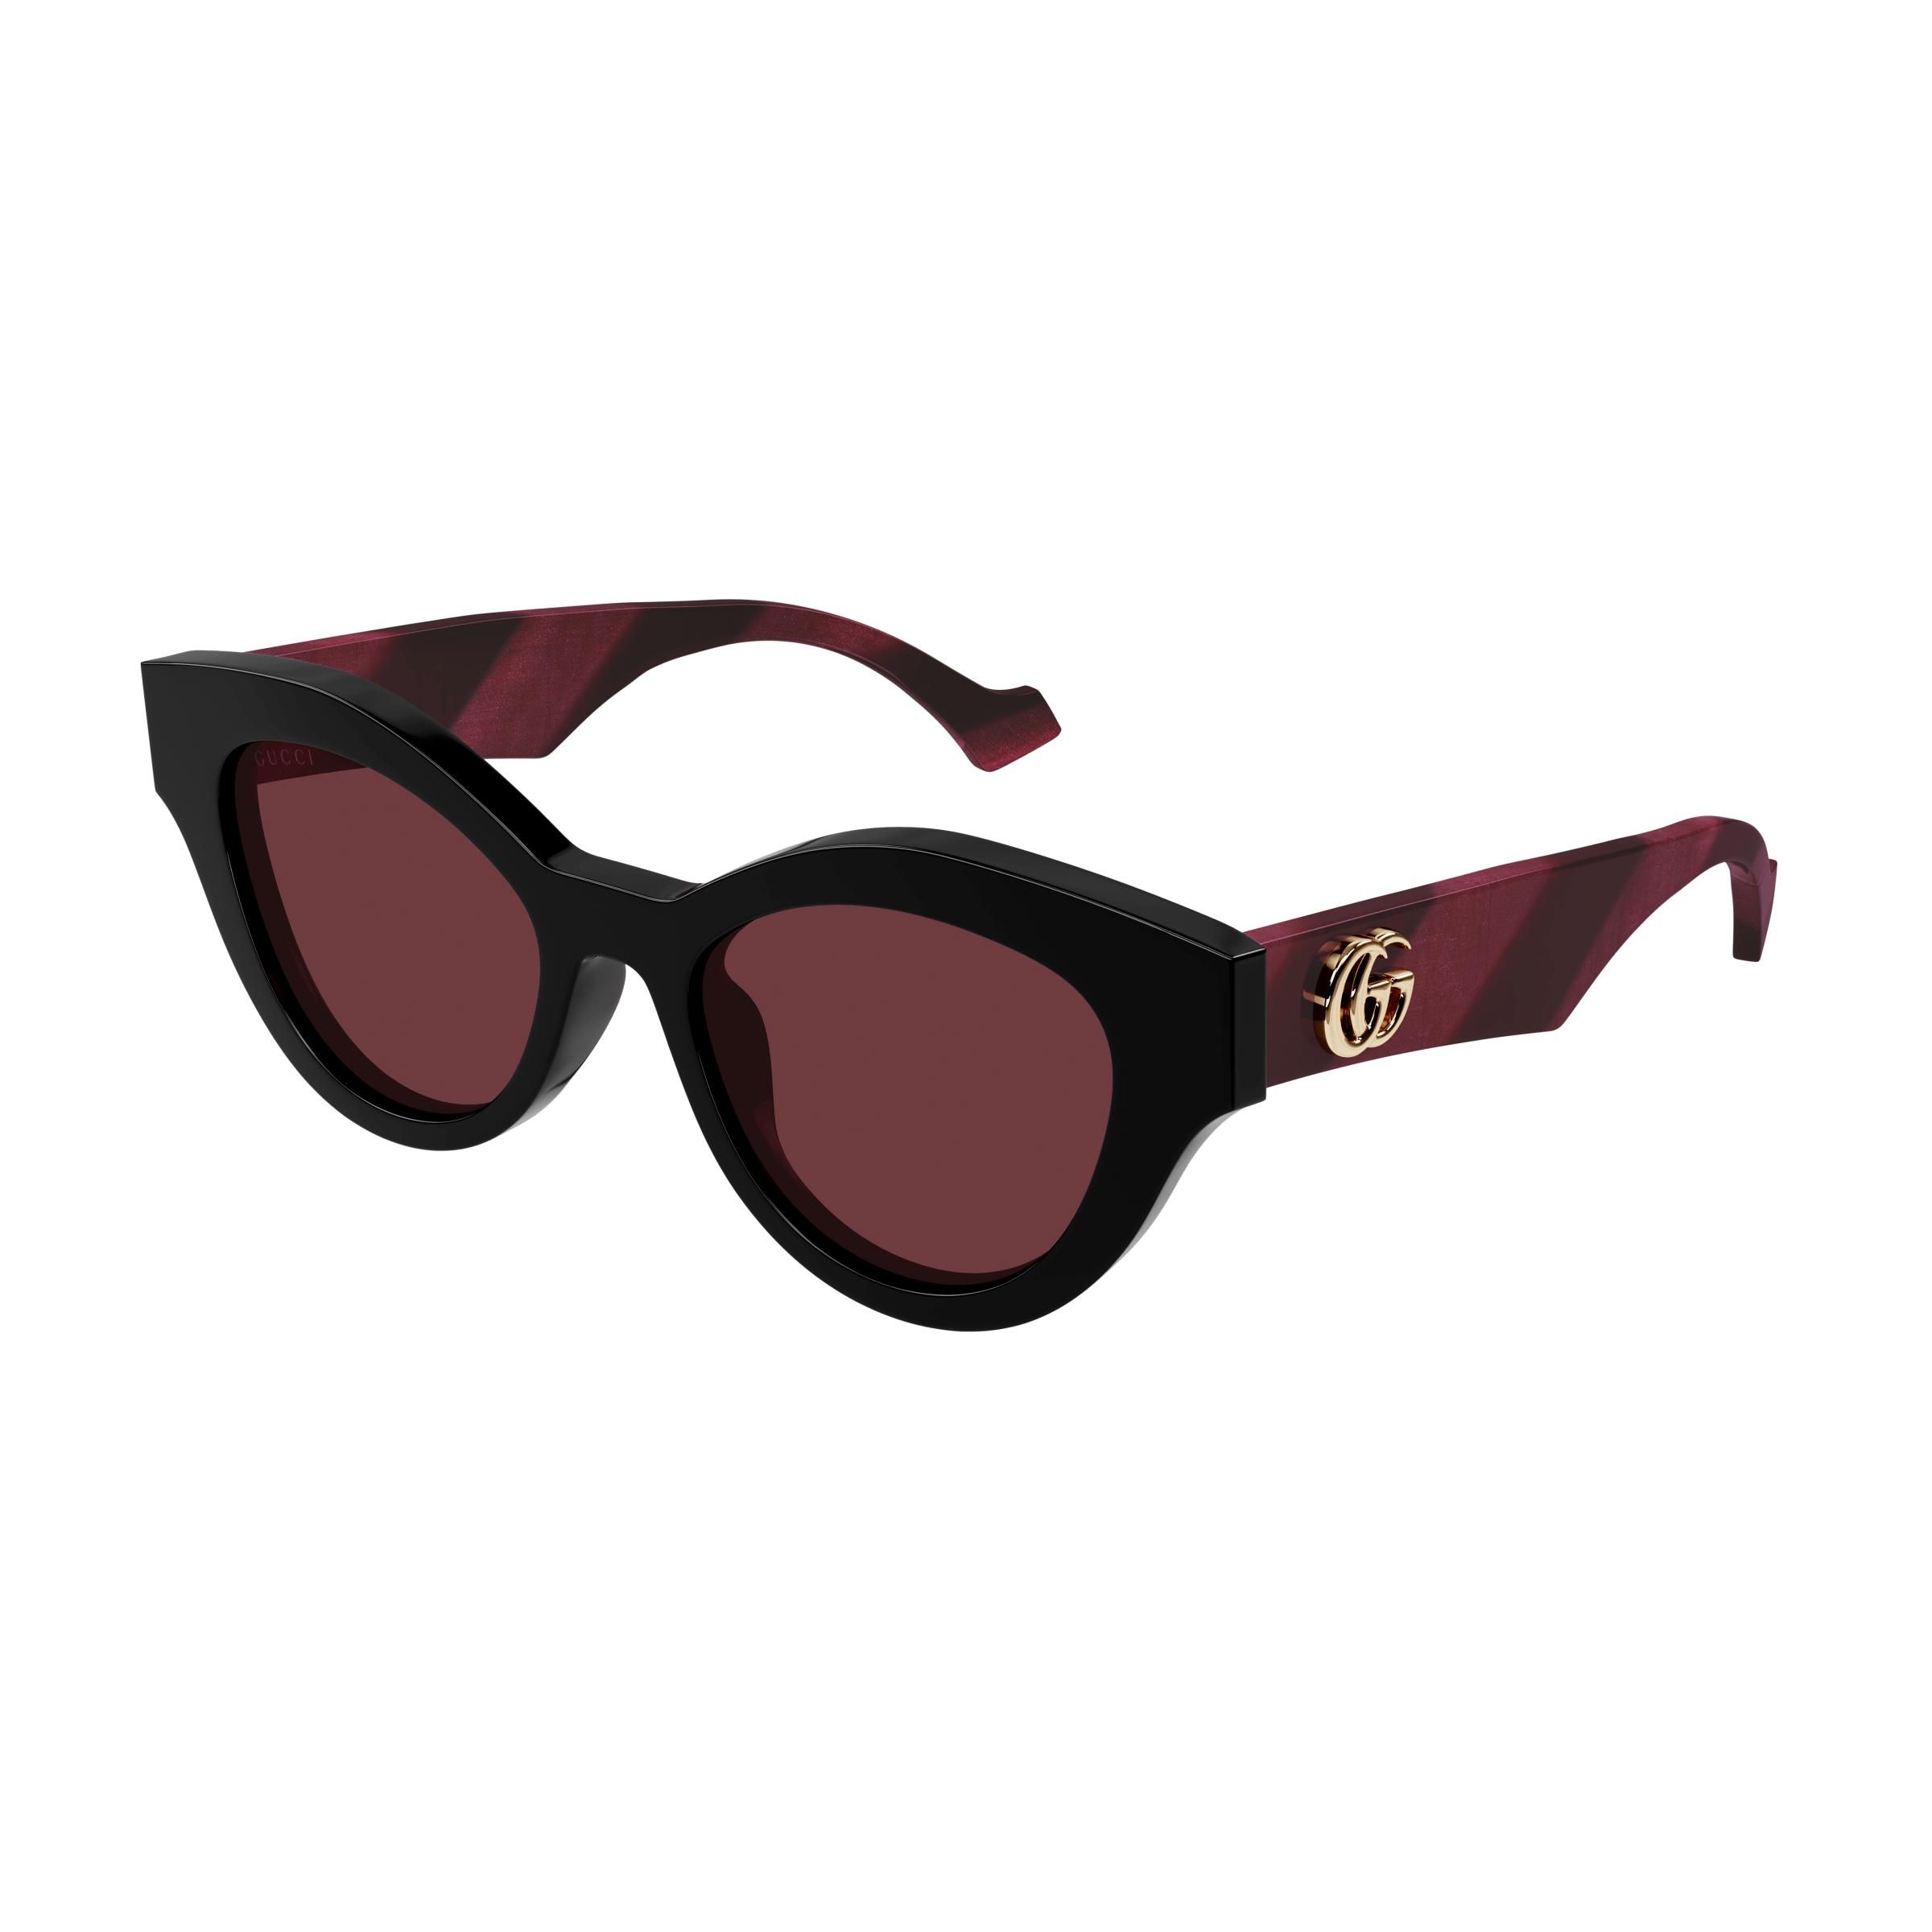 GG0957S Cat Eye Sunglasses 5 - size 51